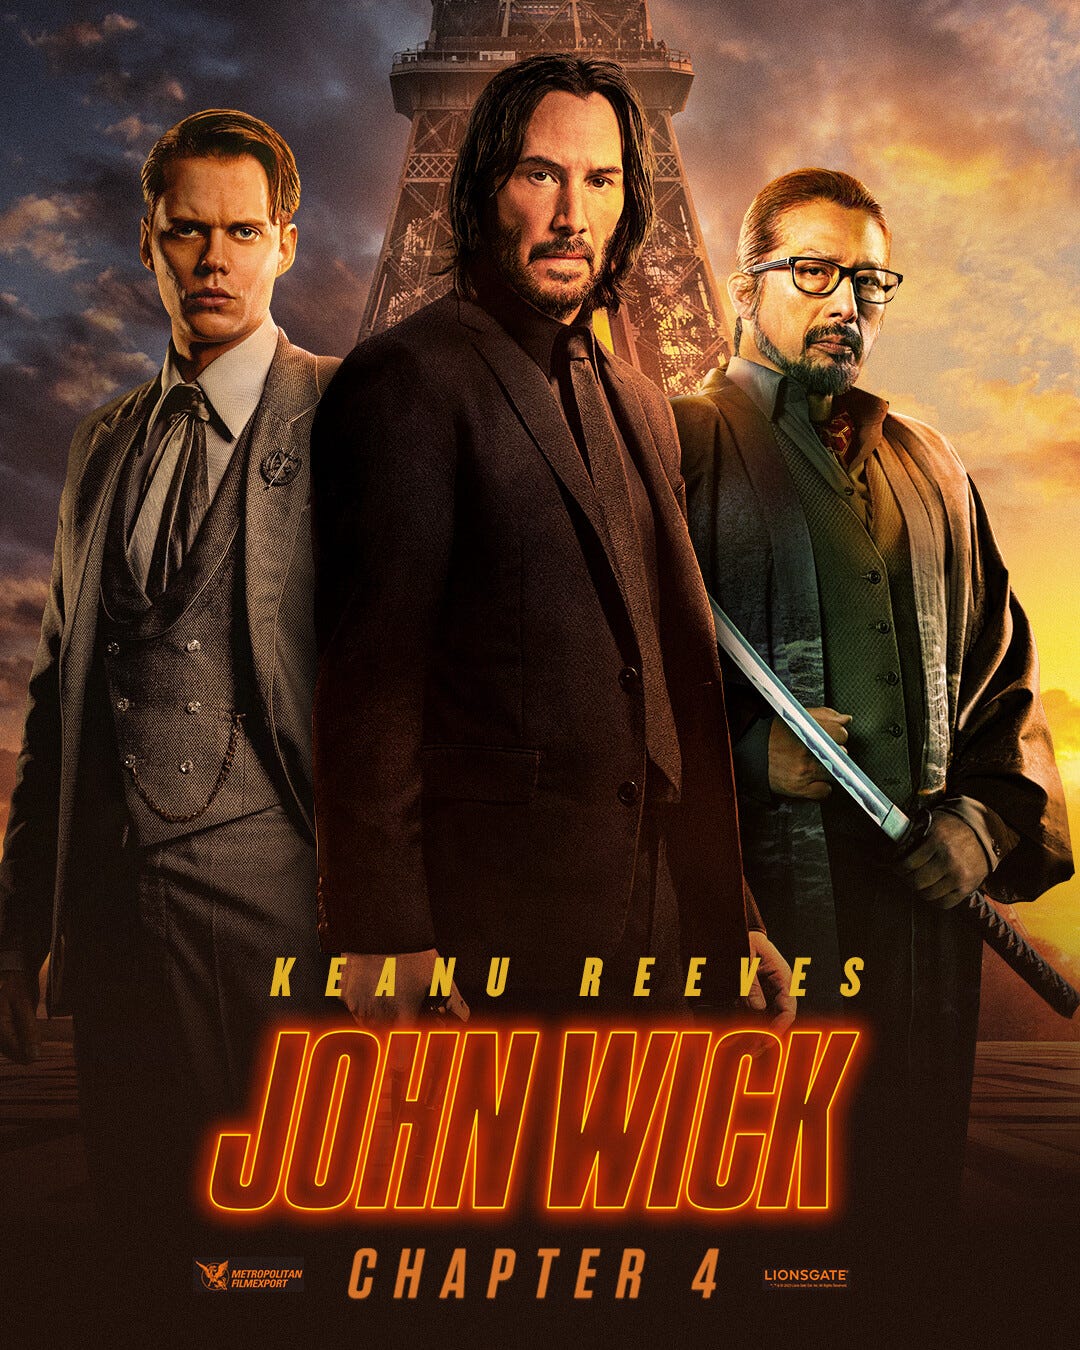 John Wick Chapter 4 official trailer: Watch online now